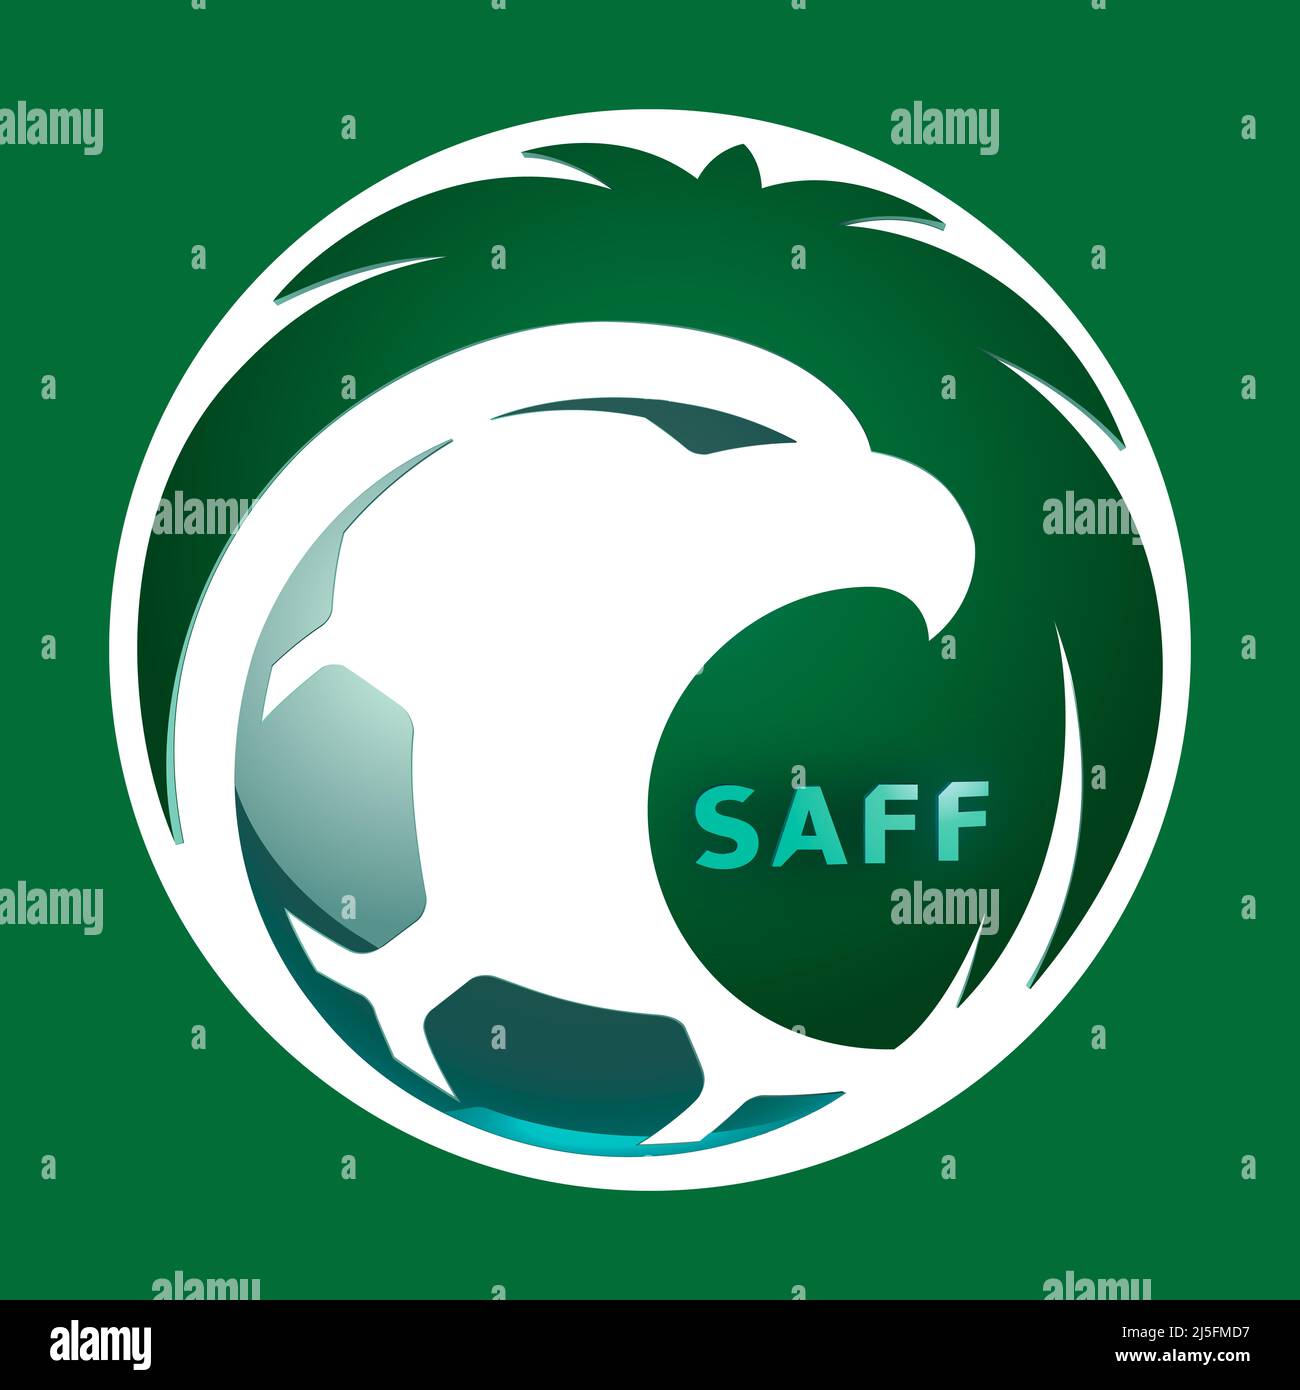 Saudi Arabia football federation logo with national flag, FIFA World Cup 2022, illustration Stock Photo